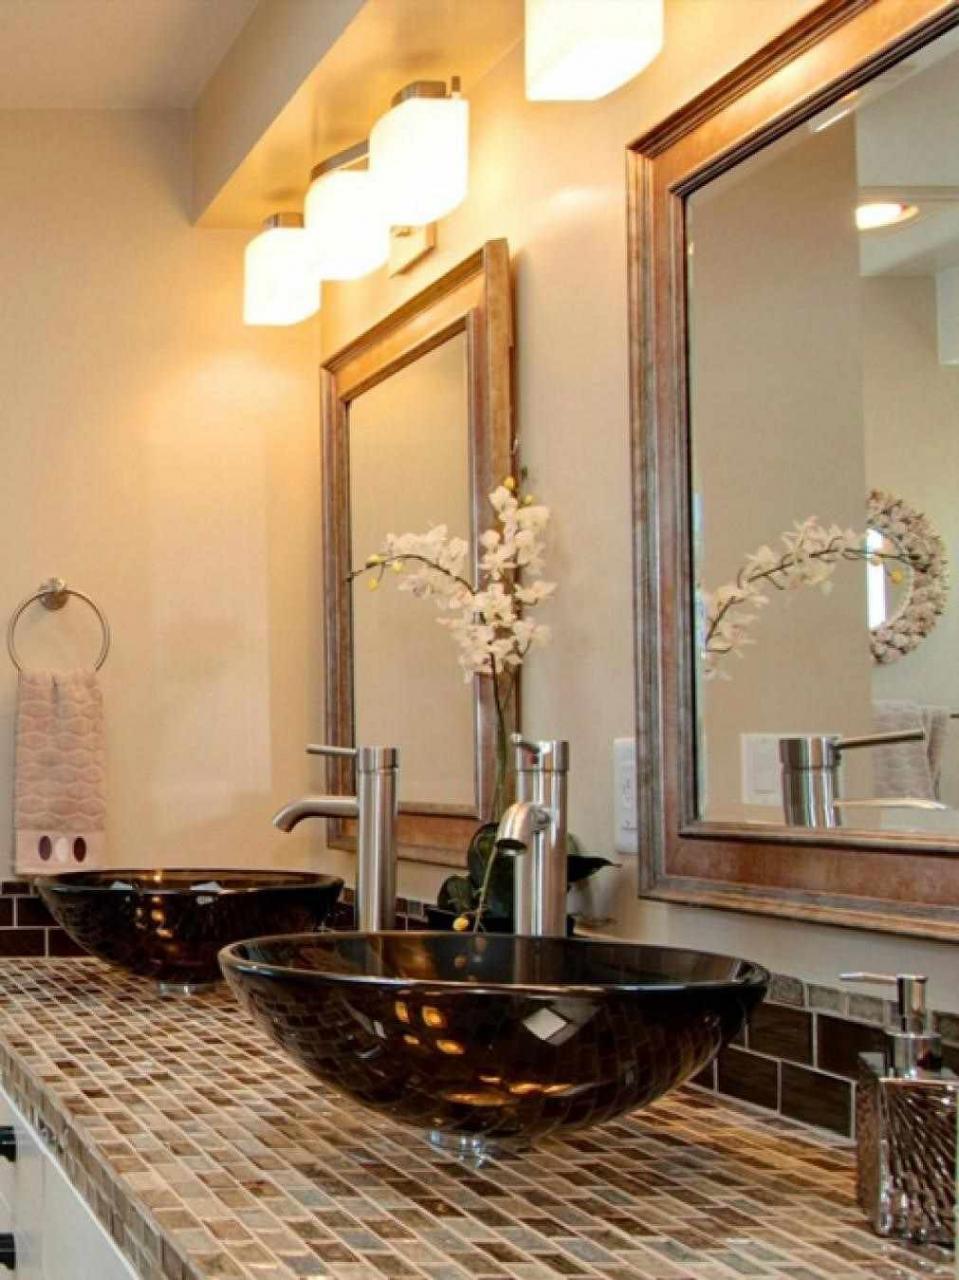 Fancy Kohls Bathroom Accessories Image Home Sweet Home